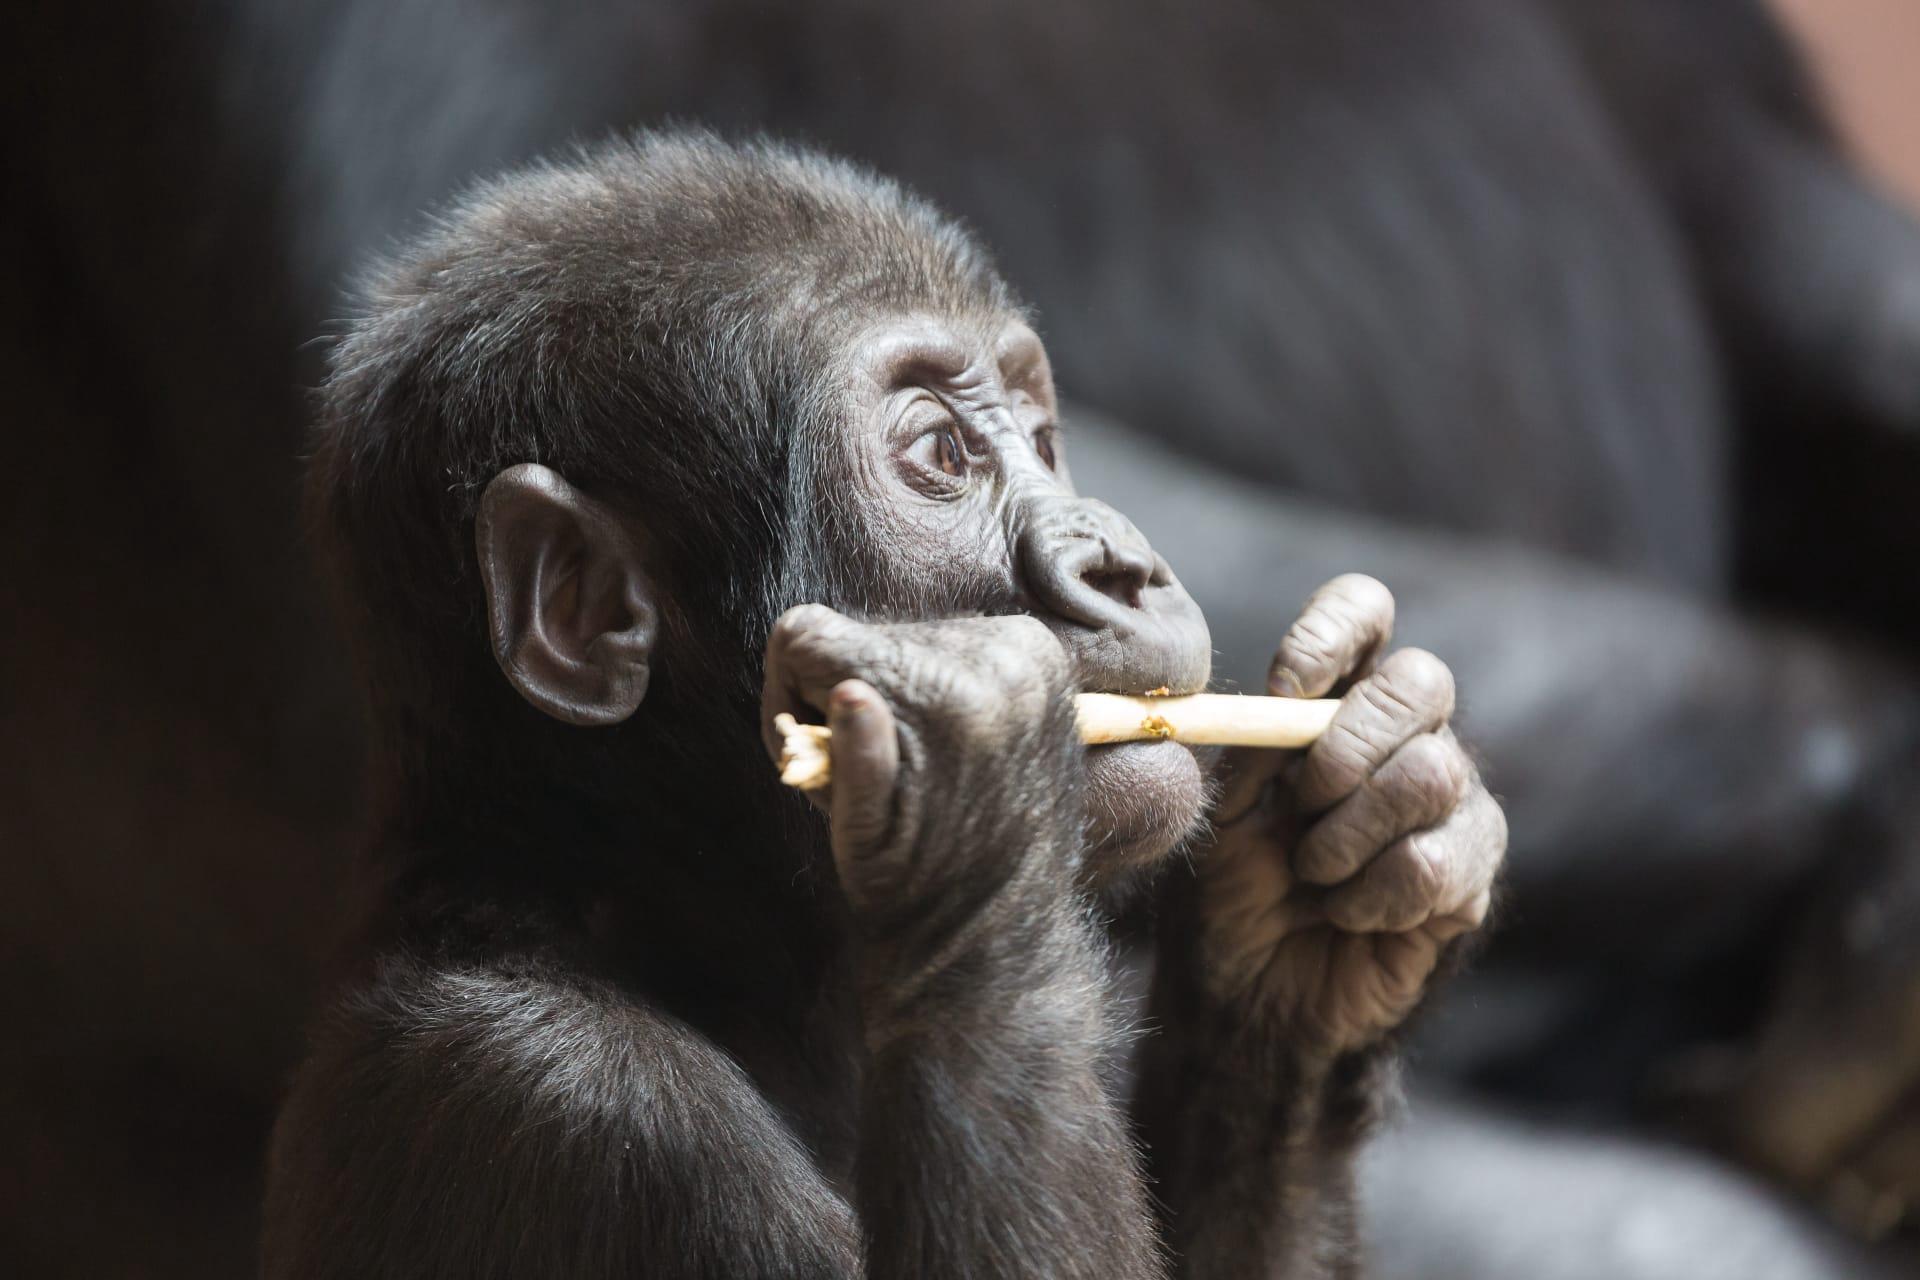 Chimpanzee pictures